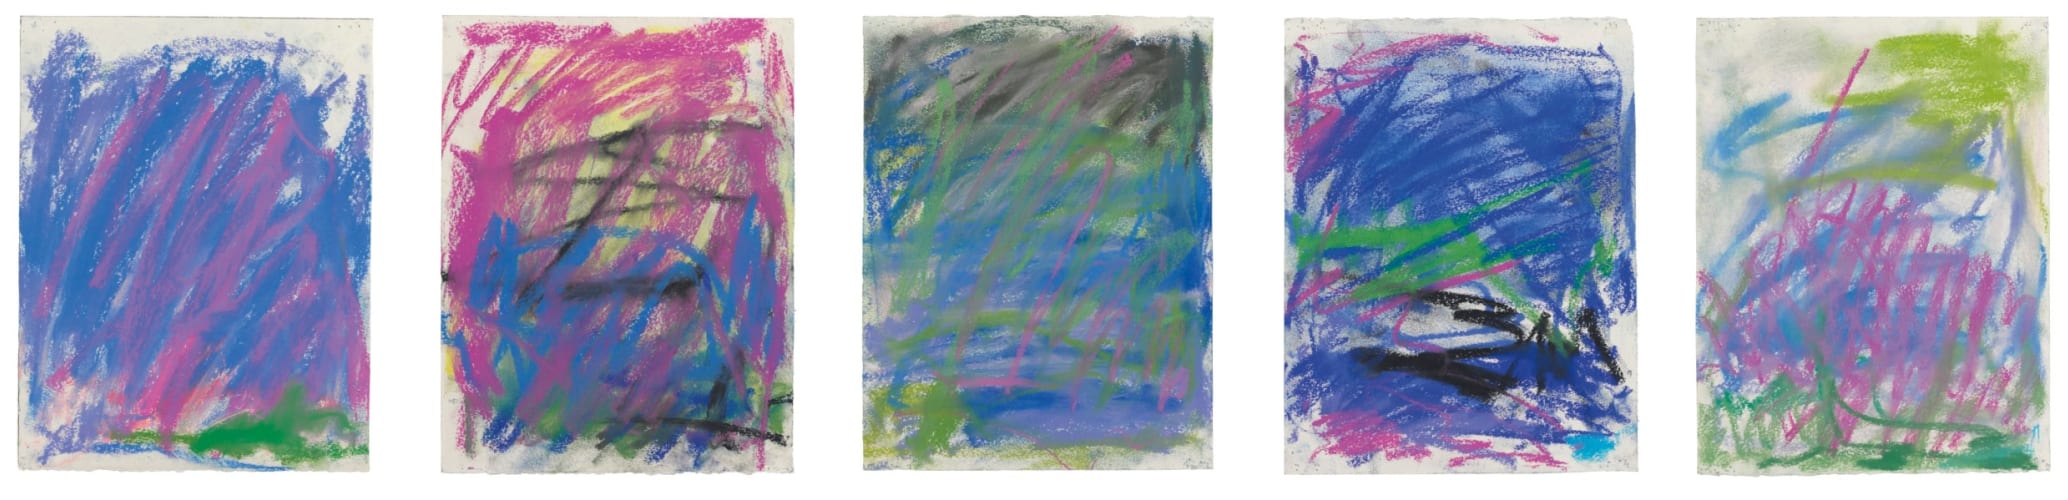 Untitled (five pastels)